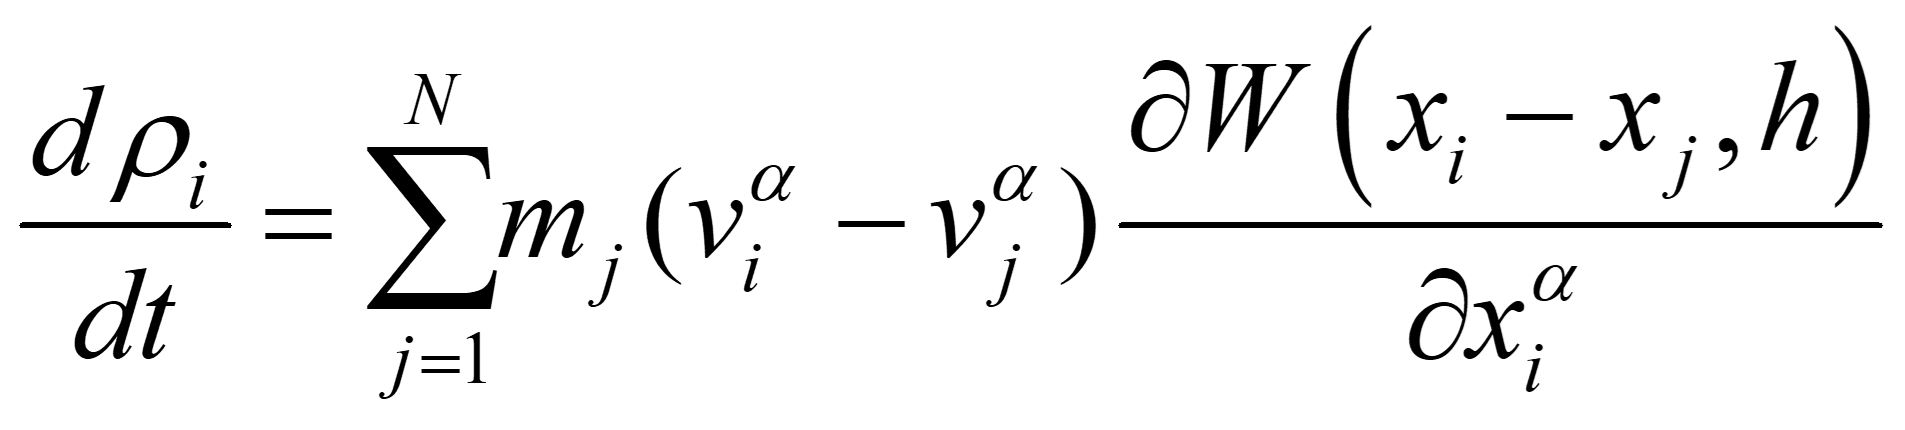 Continuity density equation